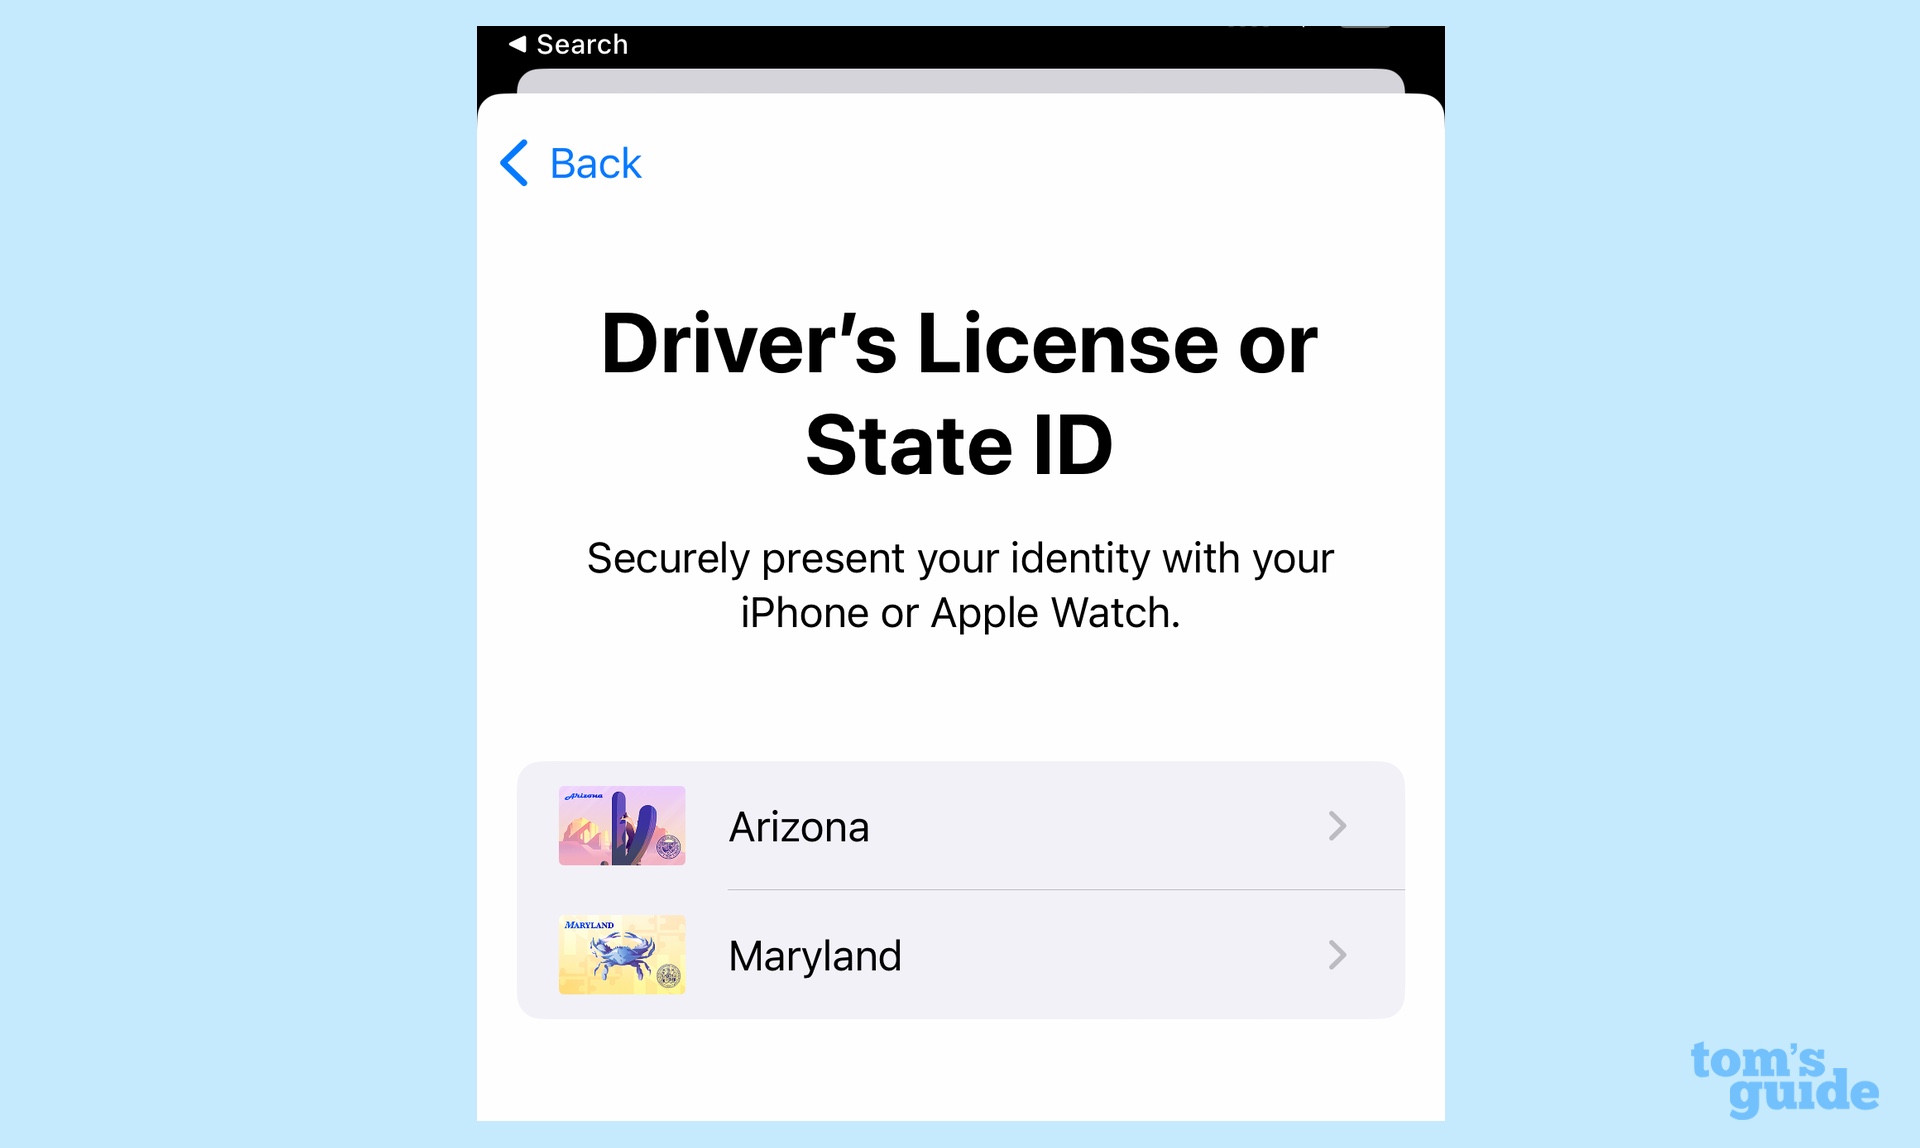 Digital ID cards stored in iOS16